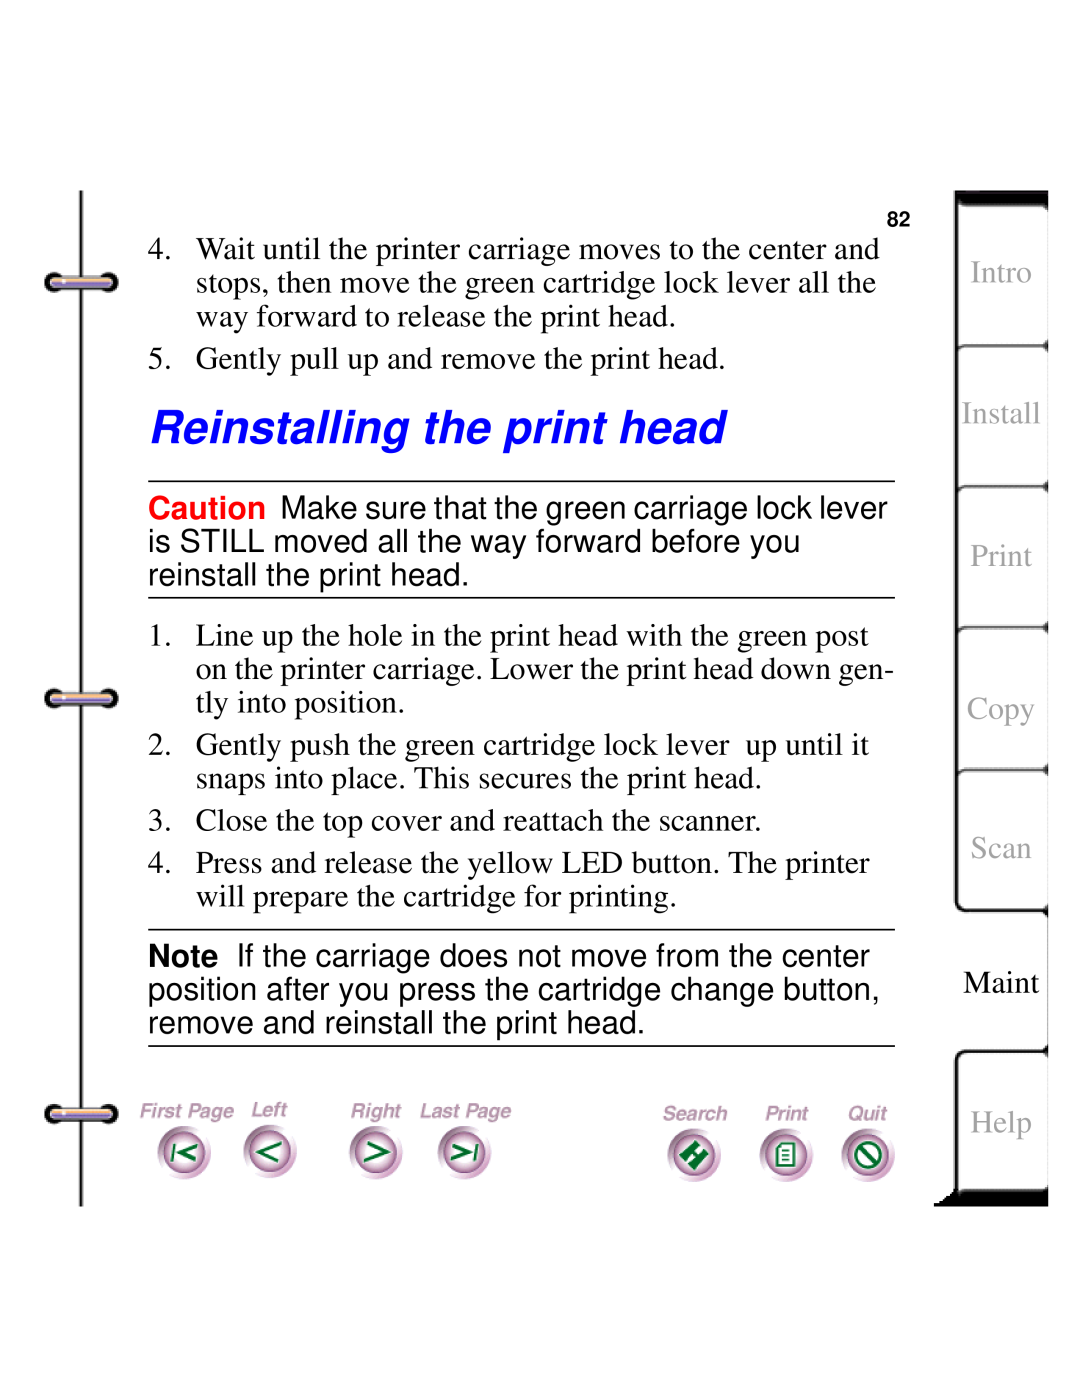 Xerox Document HomeCentre manual Reinstalling the print head, Intro Install Print Copy Scan, Help 